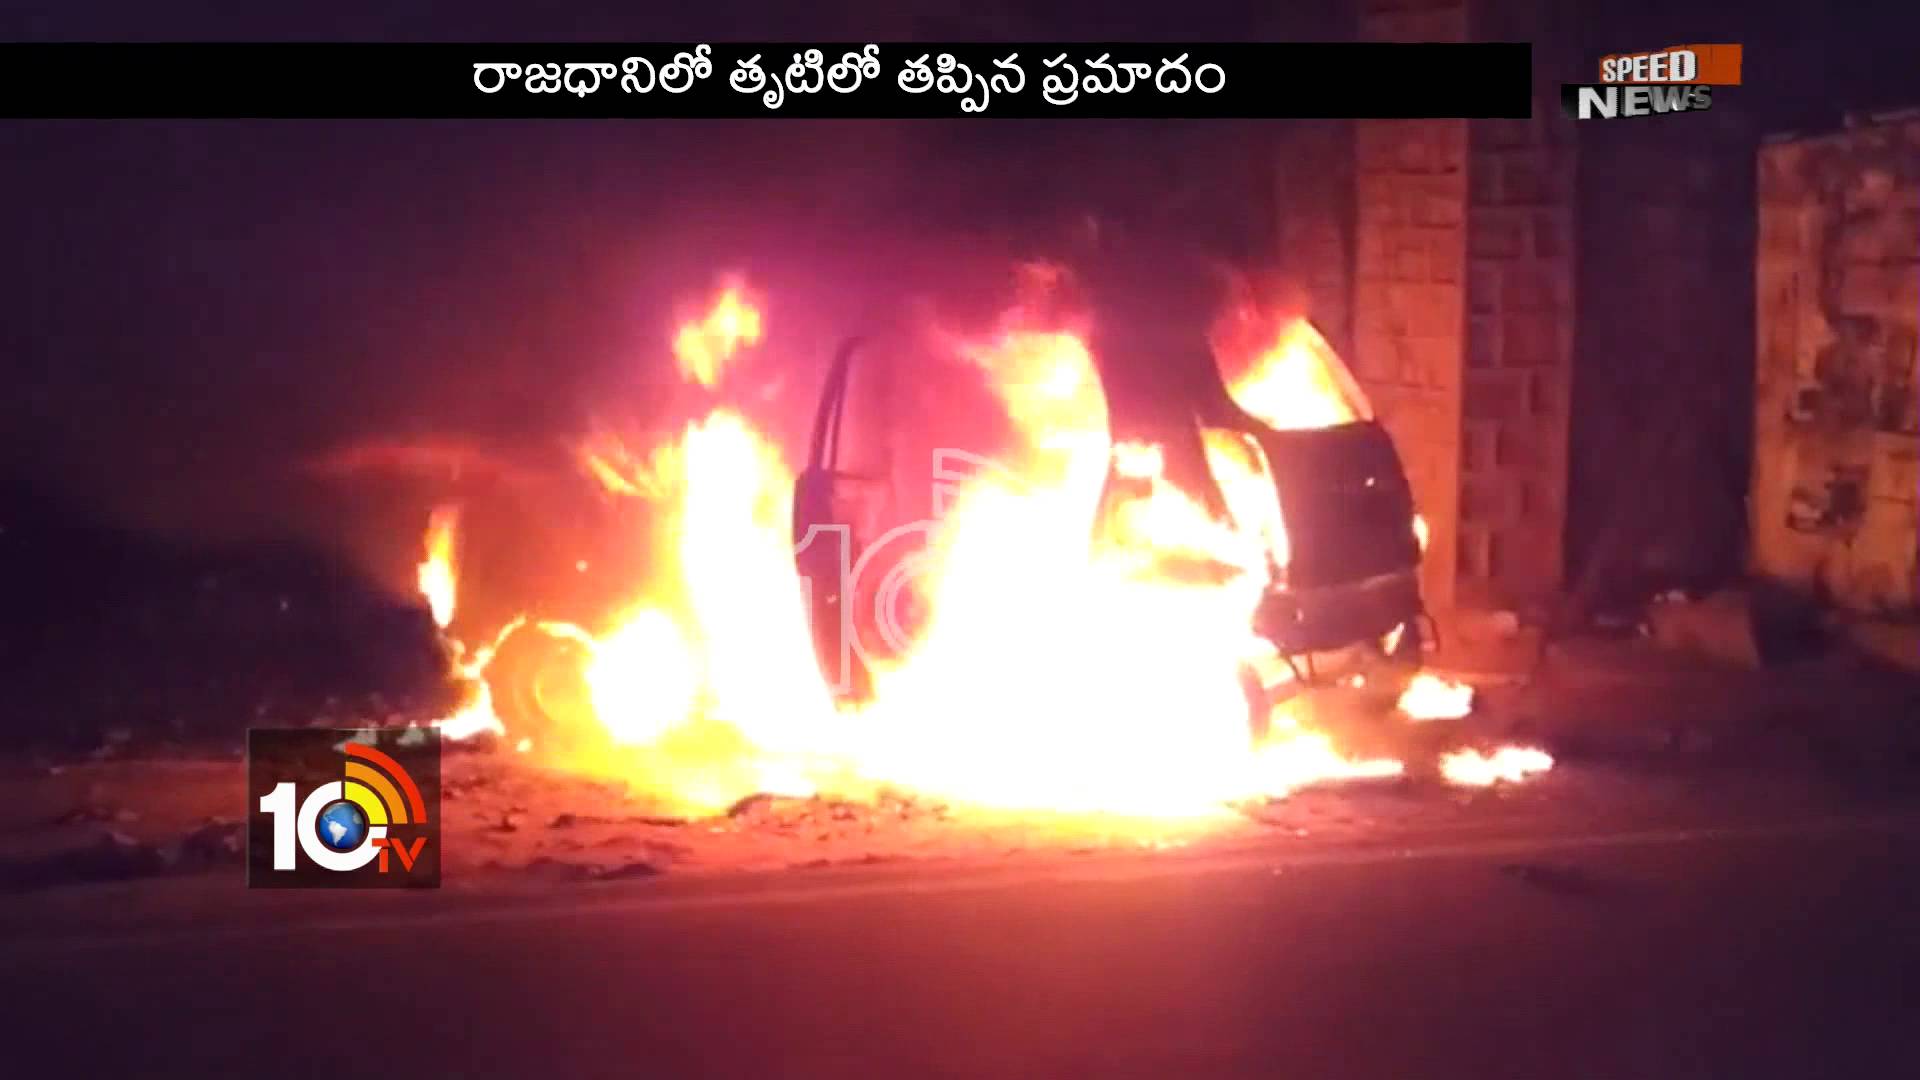 Car Catches Fire at Midnight in Tirumalagiri | 10tv - YouTube